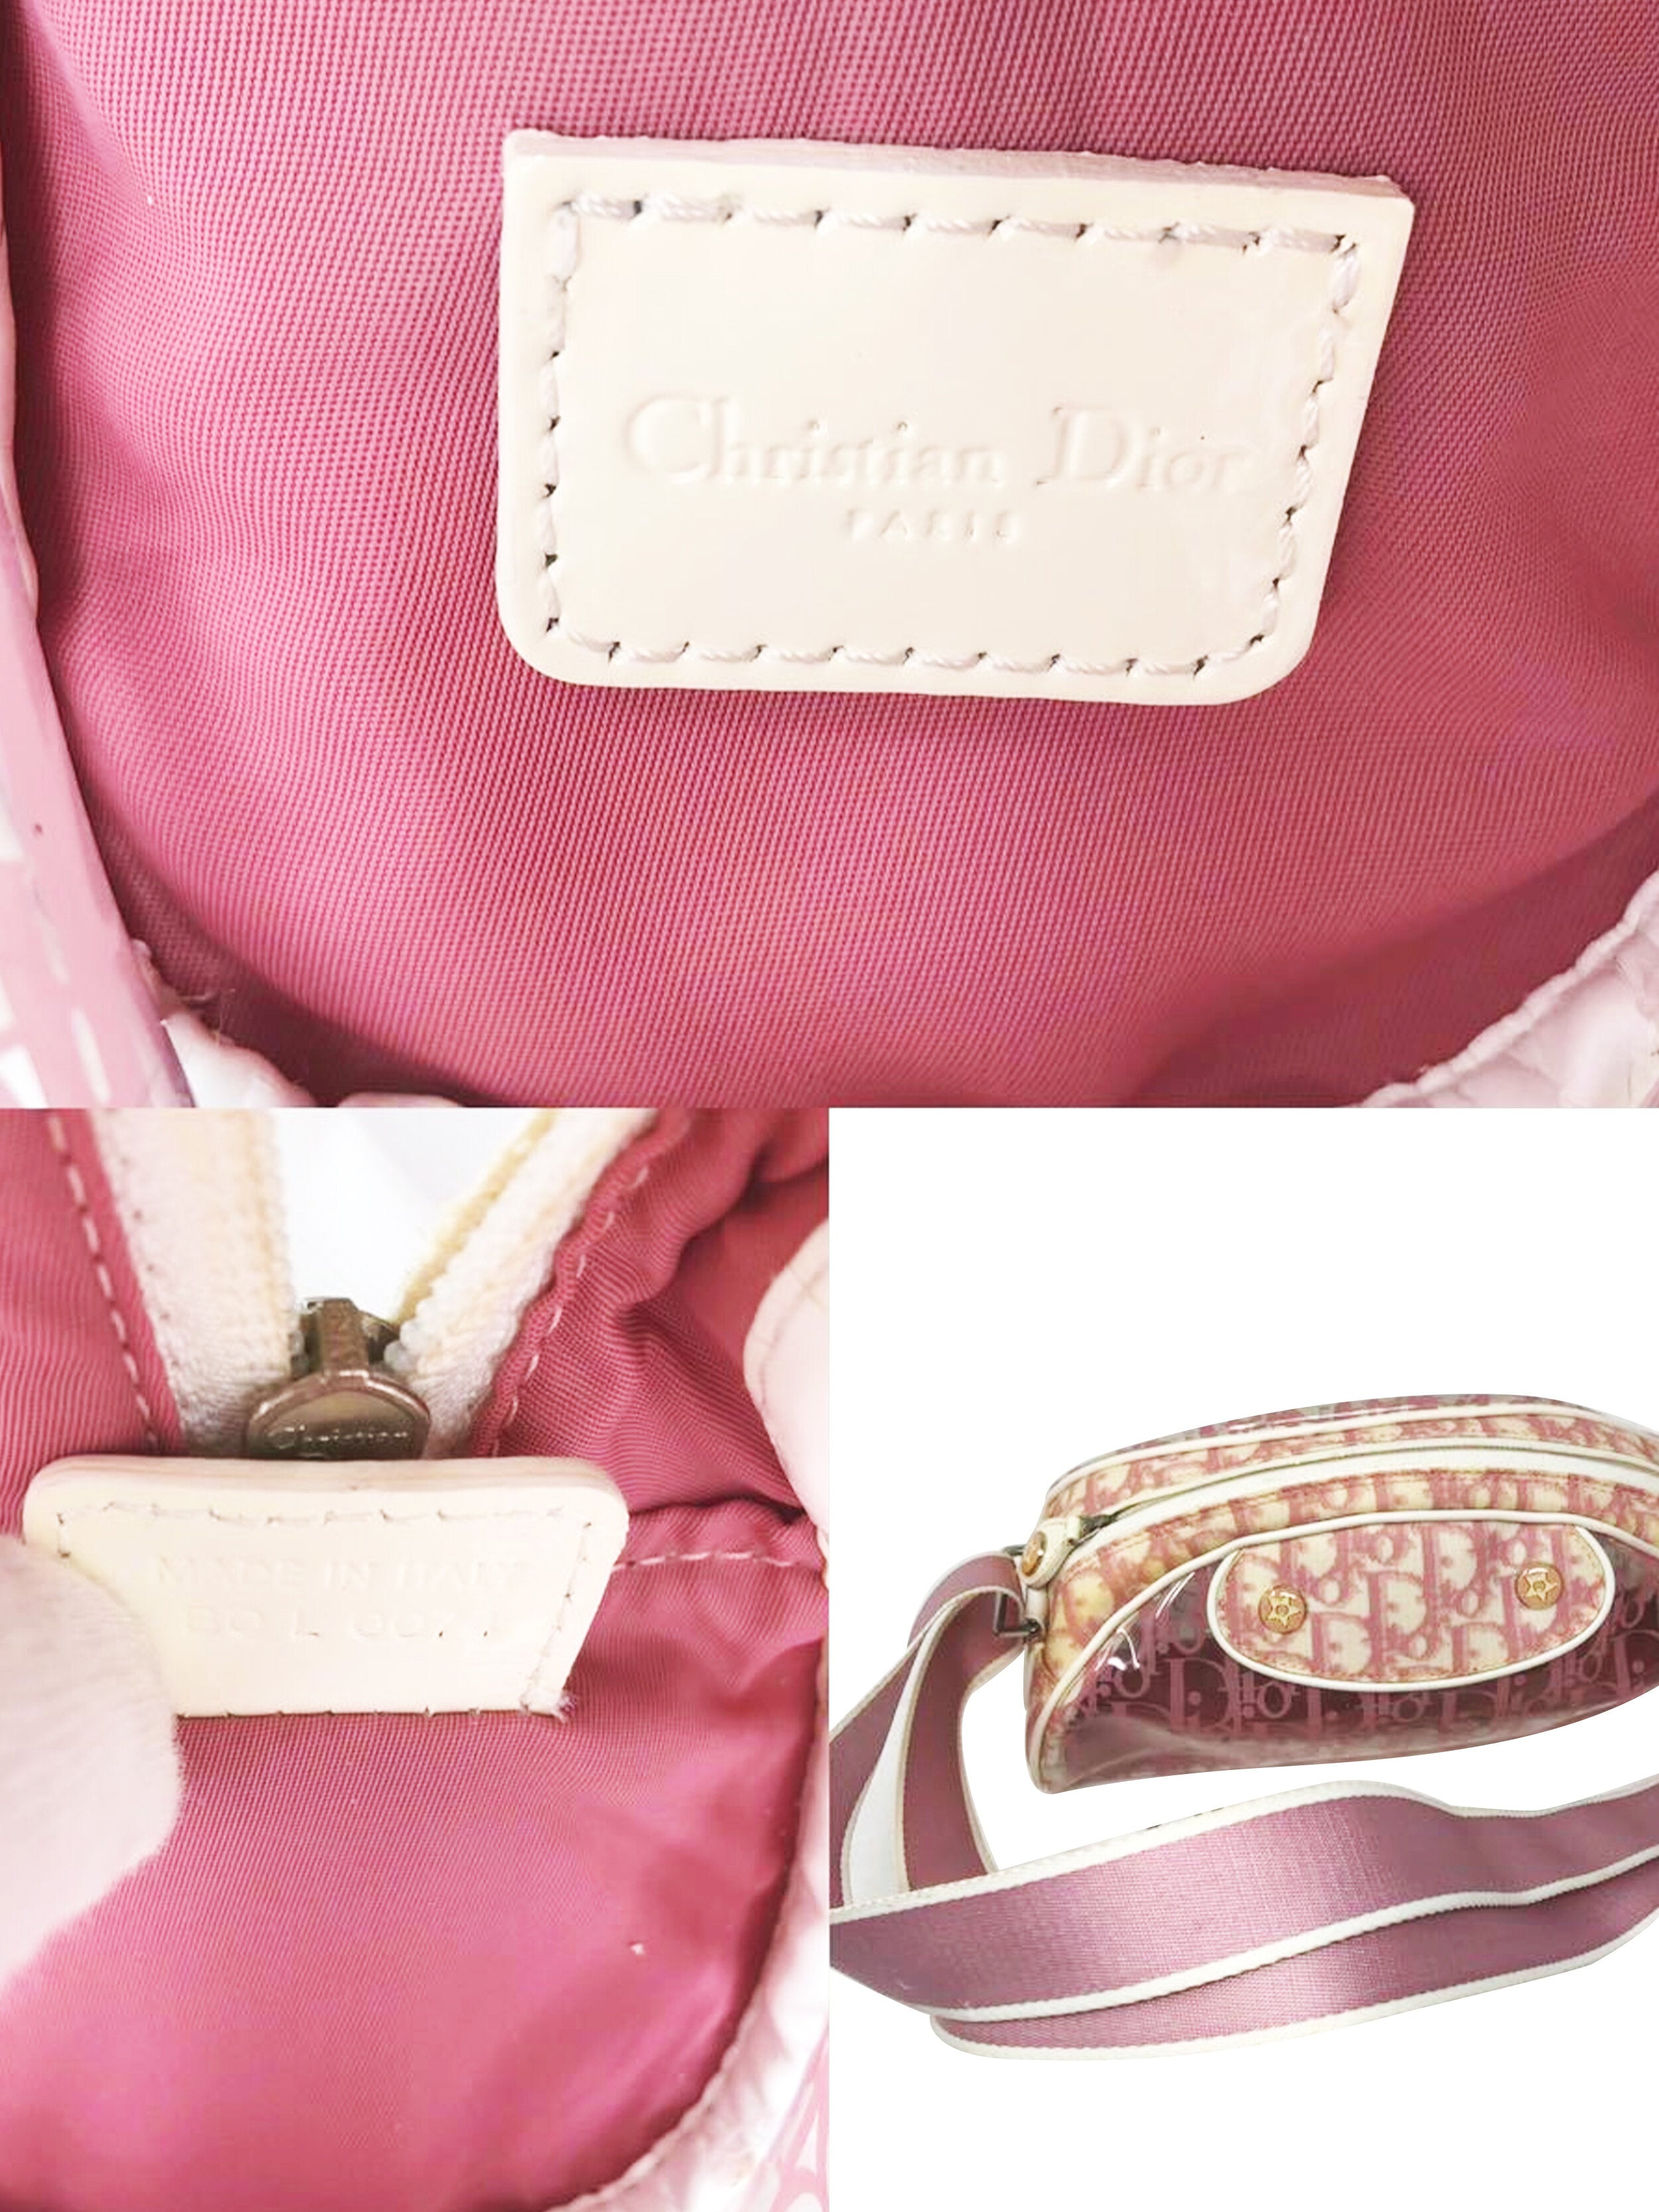 Christian Dior 2000s Small Trotter Boston Handbag · INTO